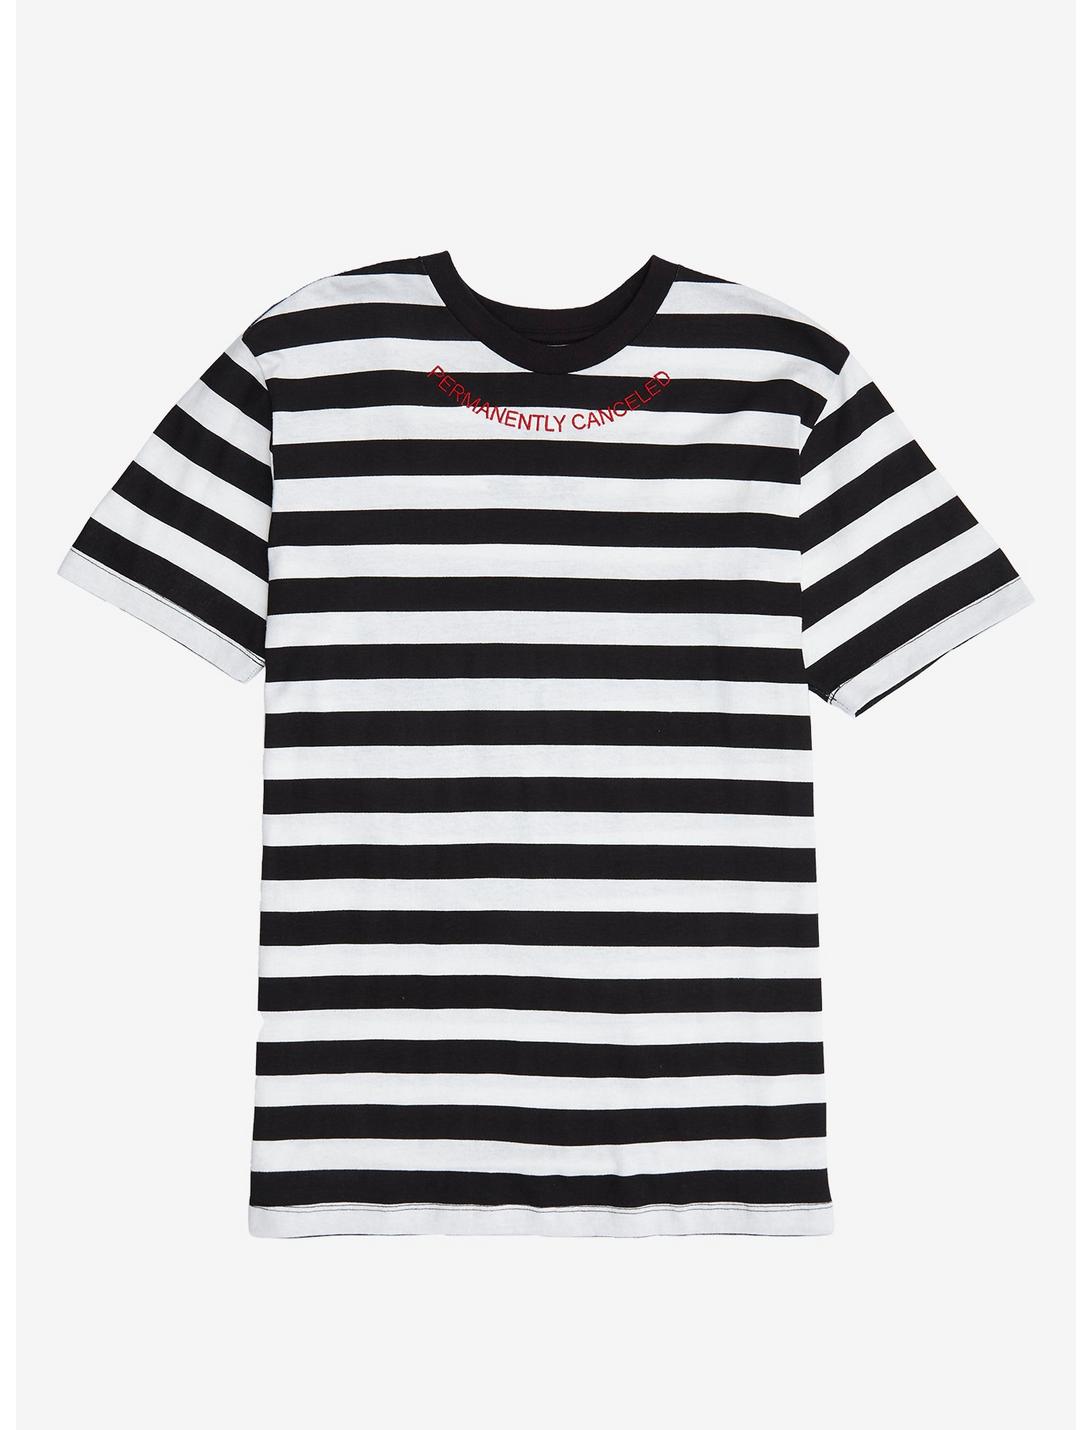 Permanently Cancelled Black & White Stripe T-Shirt, STRIPE - WHITE, hi-res